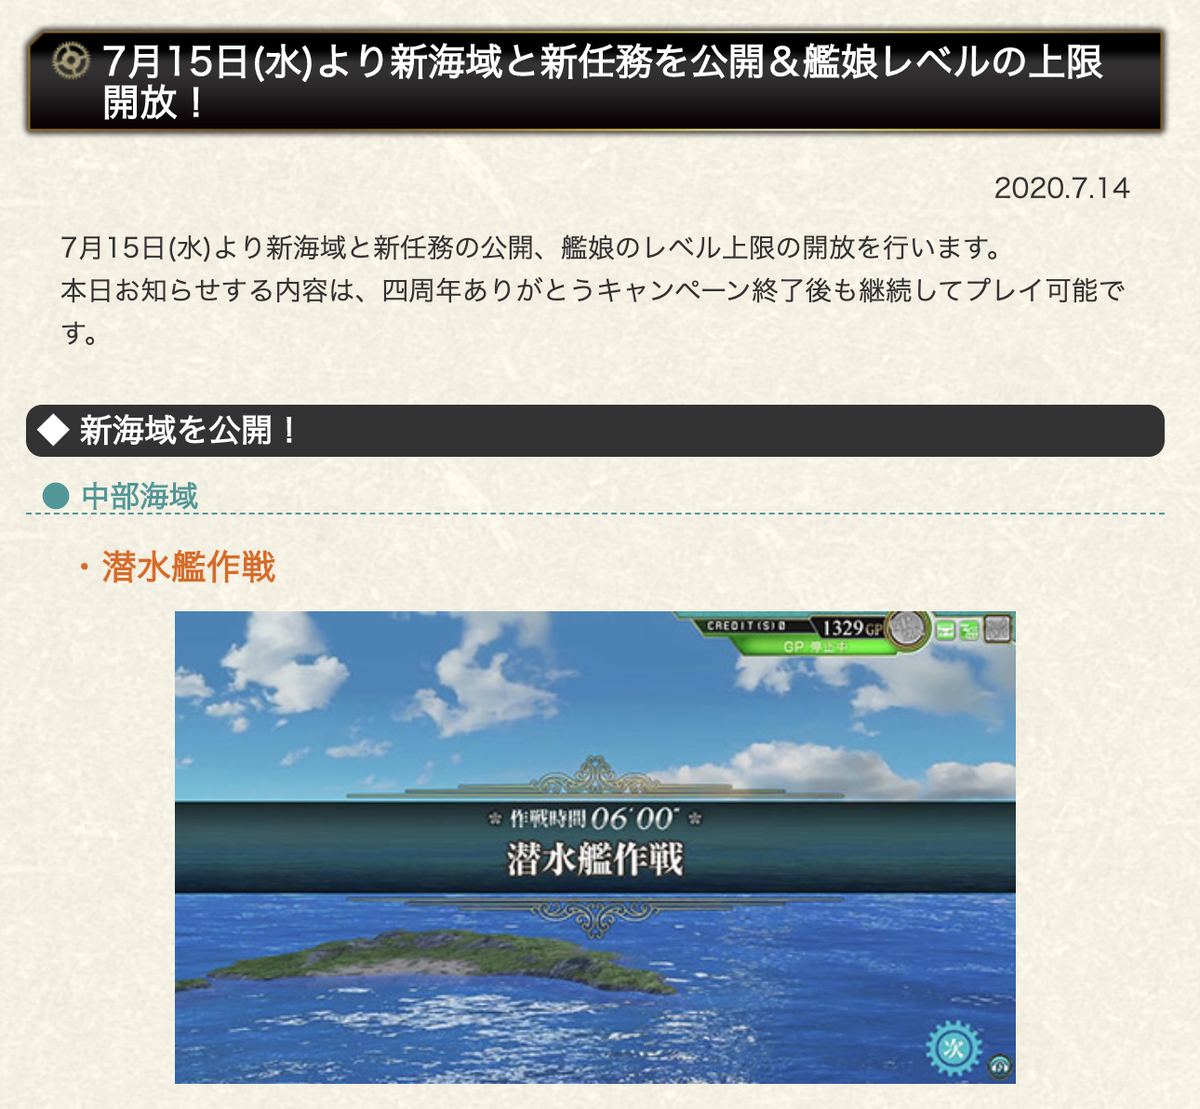 Makoto Osaki 艦これアーケード いわゆる6 1 中部海域哨戒線 潜水艦作戦 追加や任務追加などです 詳細は下記url先を御確認ください T Co 8i8z9nruy9